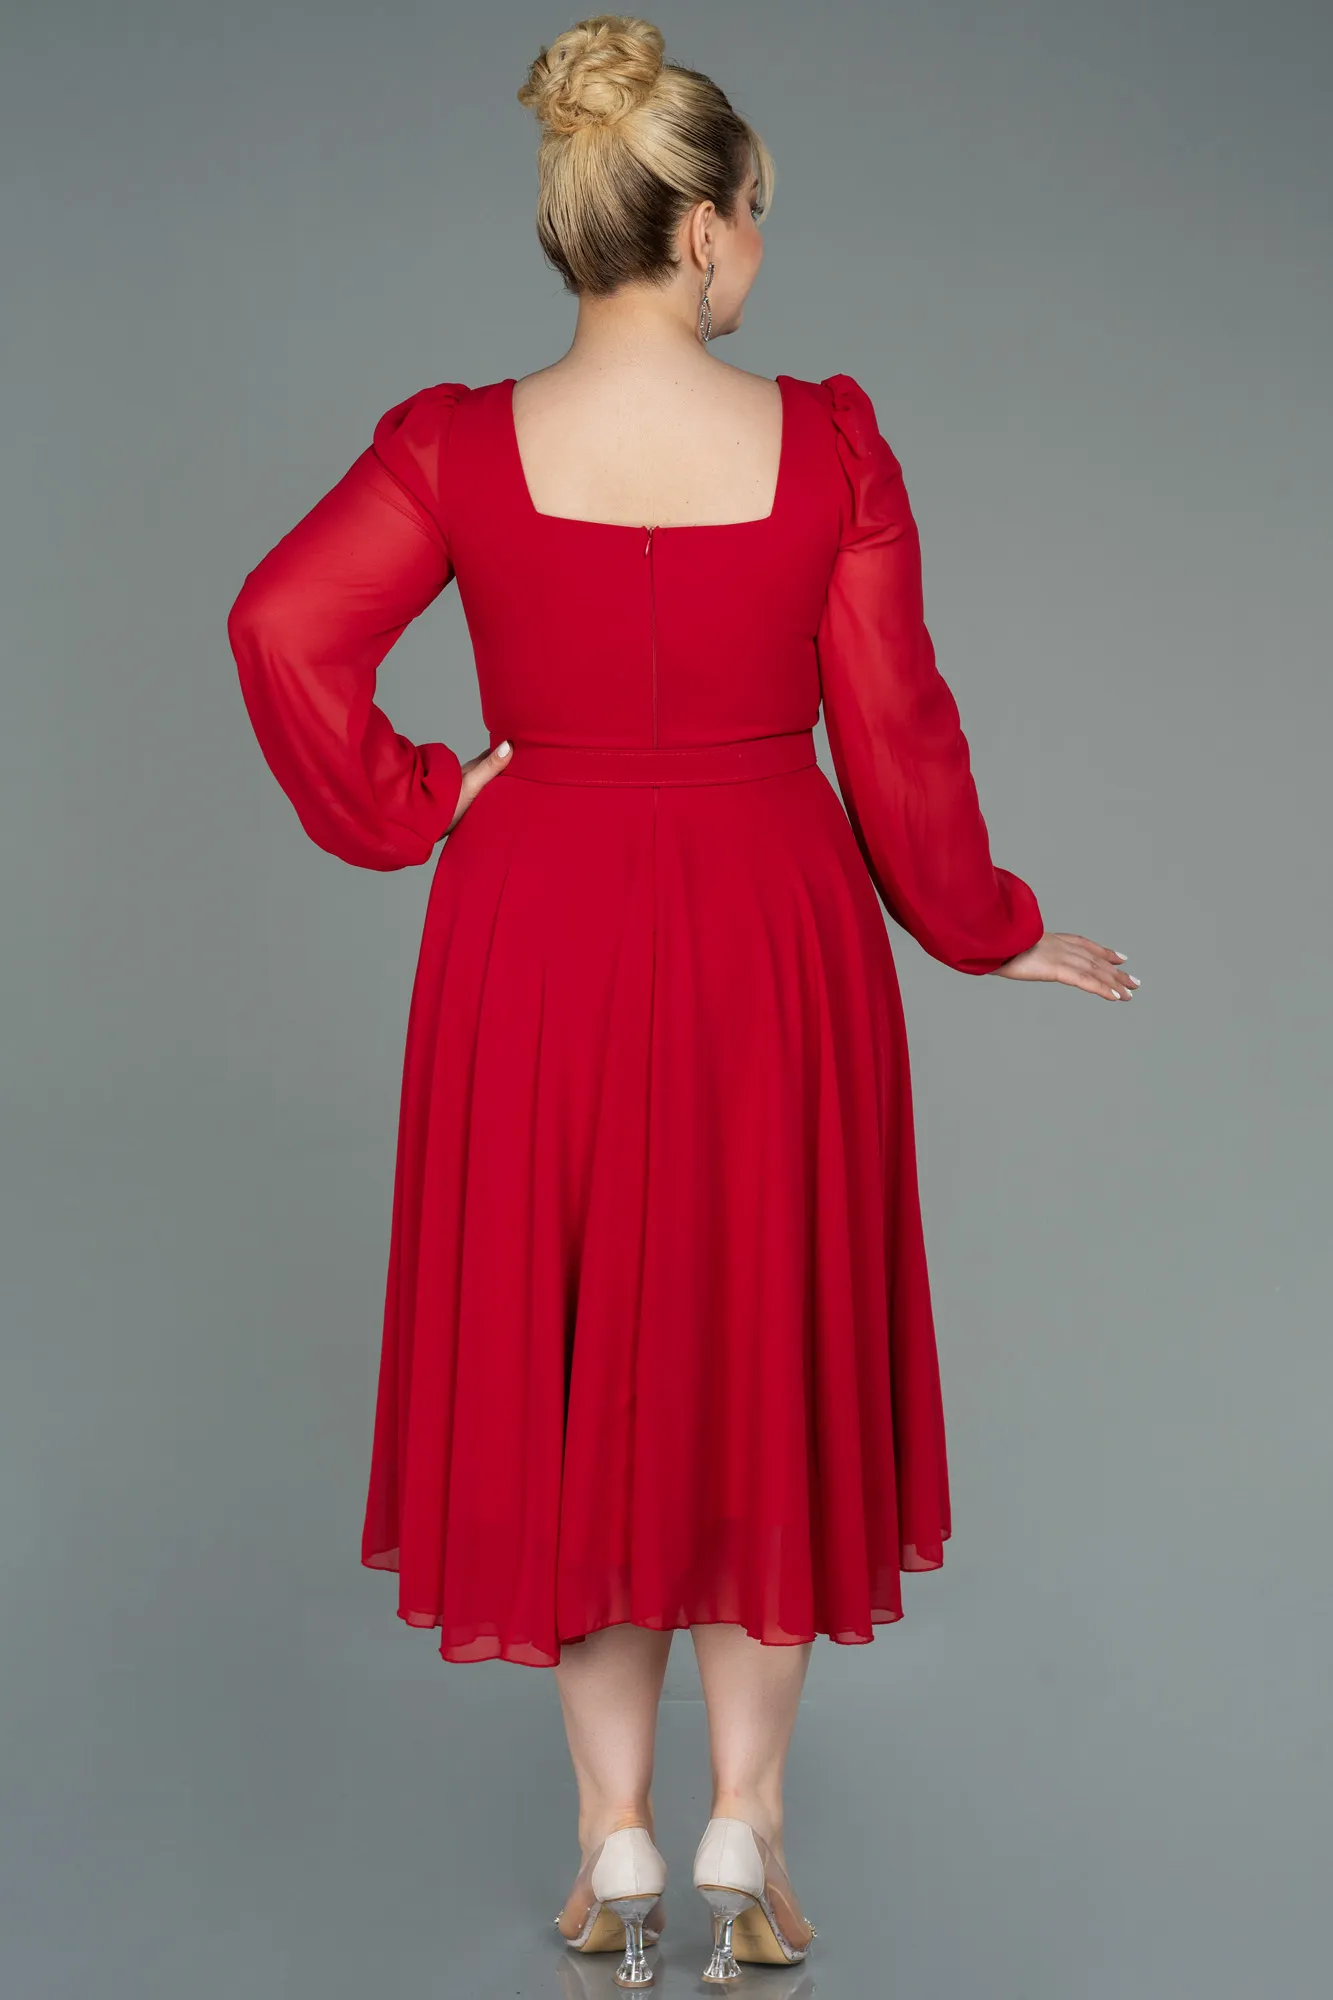 Red-Midi Chiffon Plus Size Evening Dress ABK1753